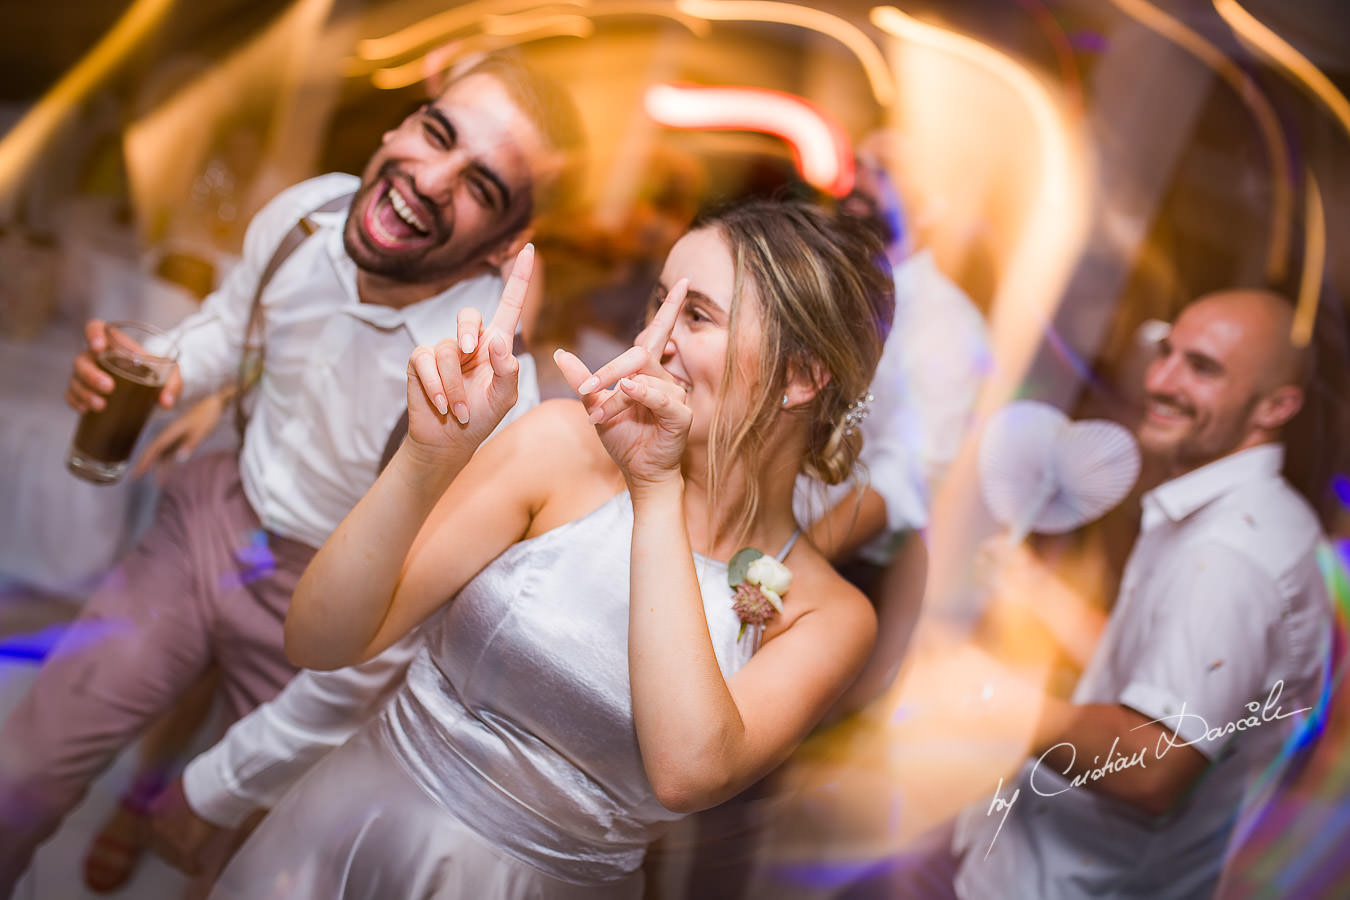 Wedding moments during a Beautiful Wedding at Elias Beach Hotel captured by Cyprus Photographer Cristian Dascalu.